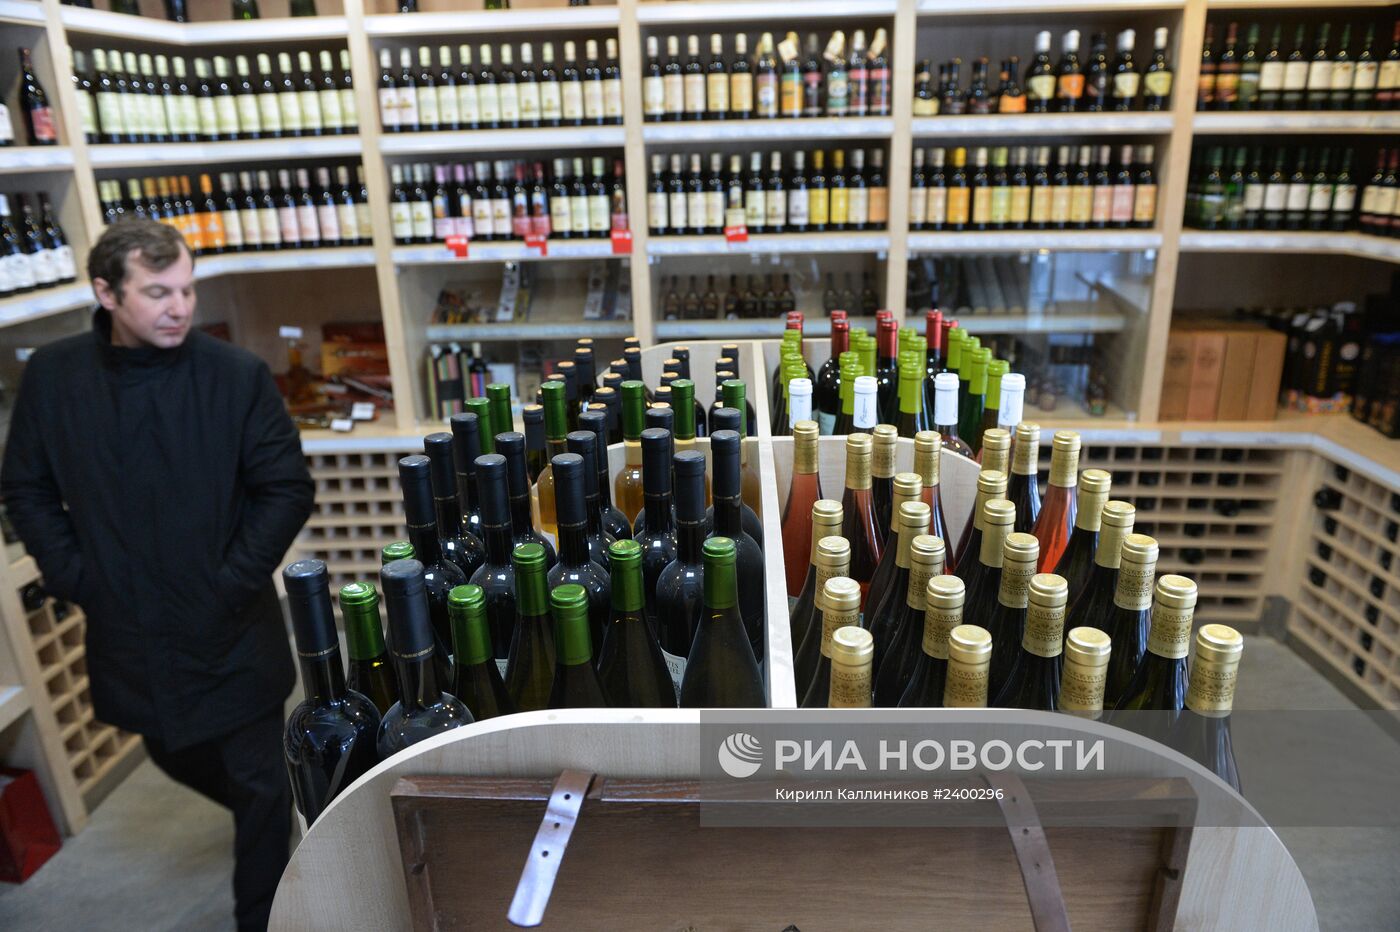 Работа магазина крымских вин "Массандра - Легенда Крыма"